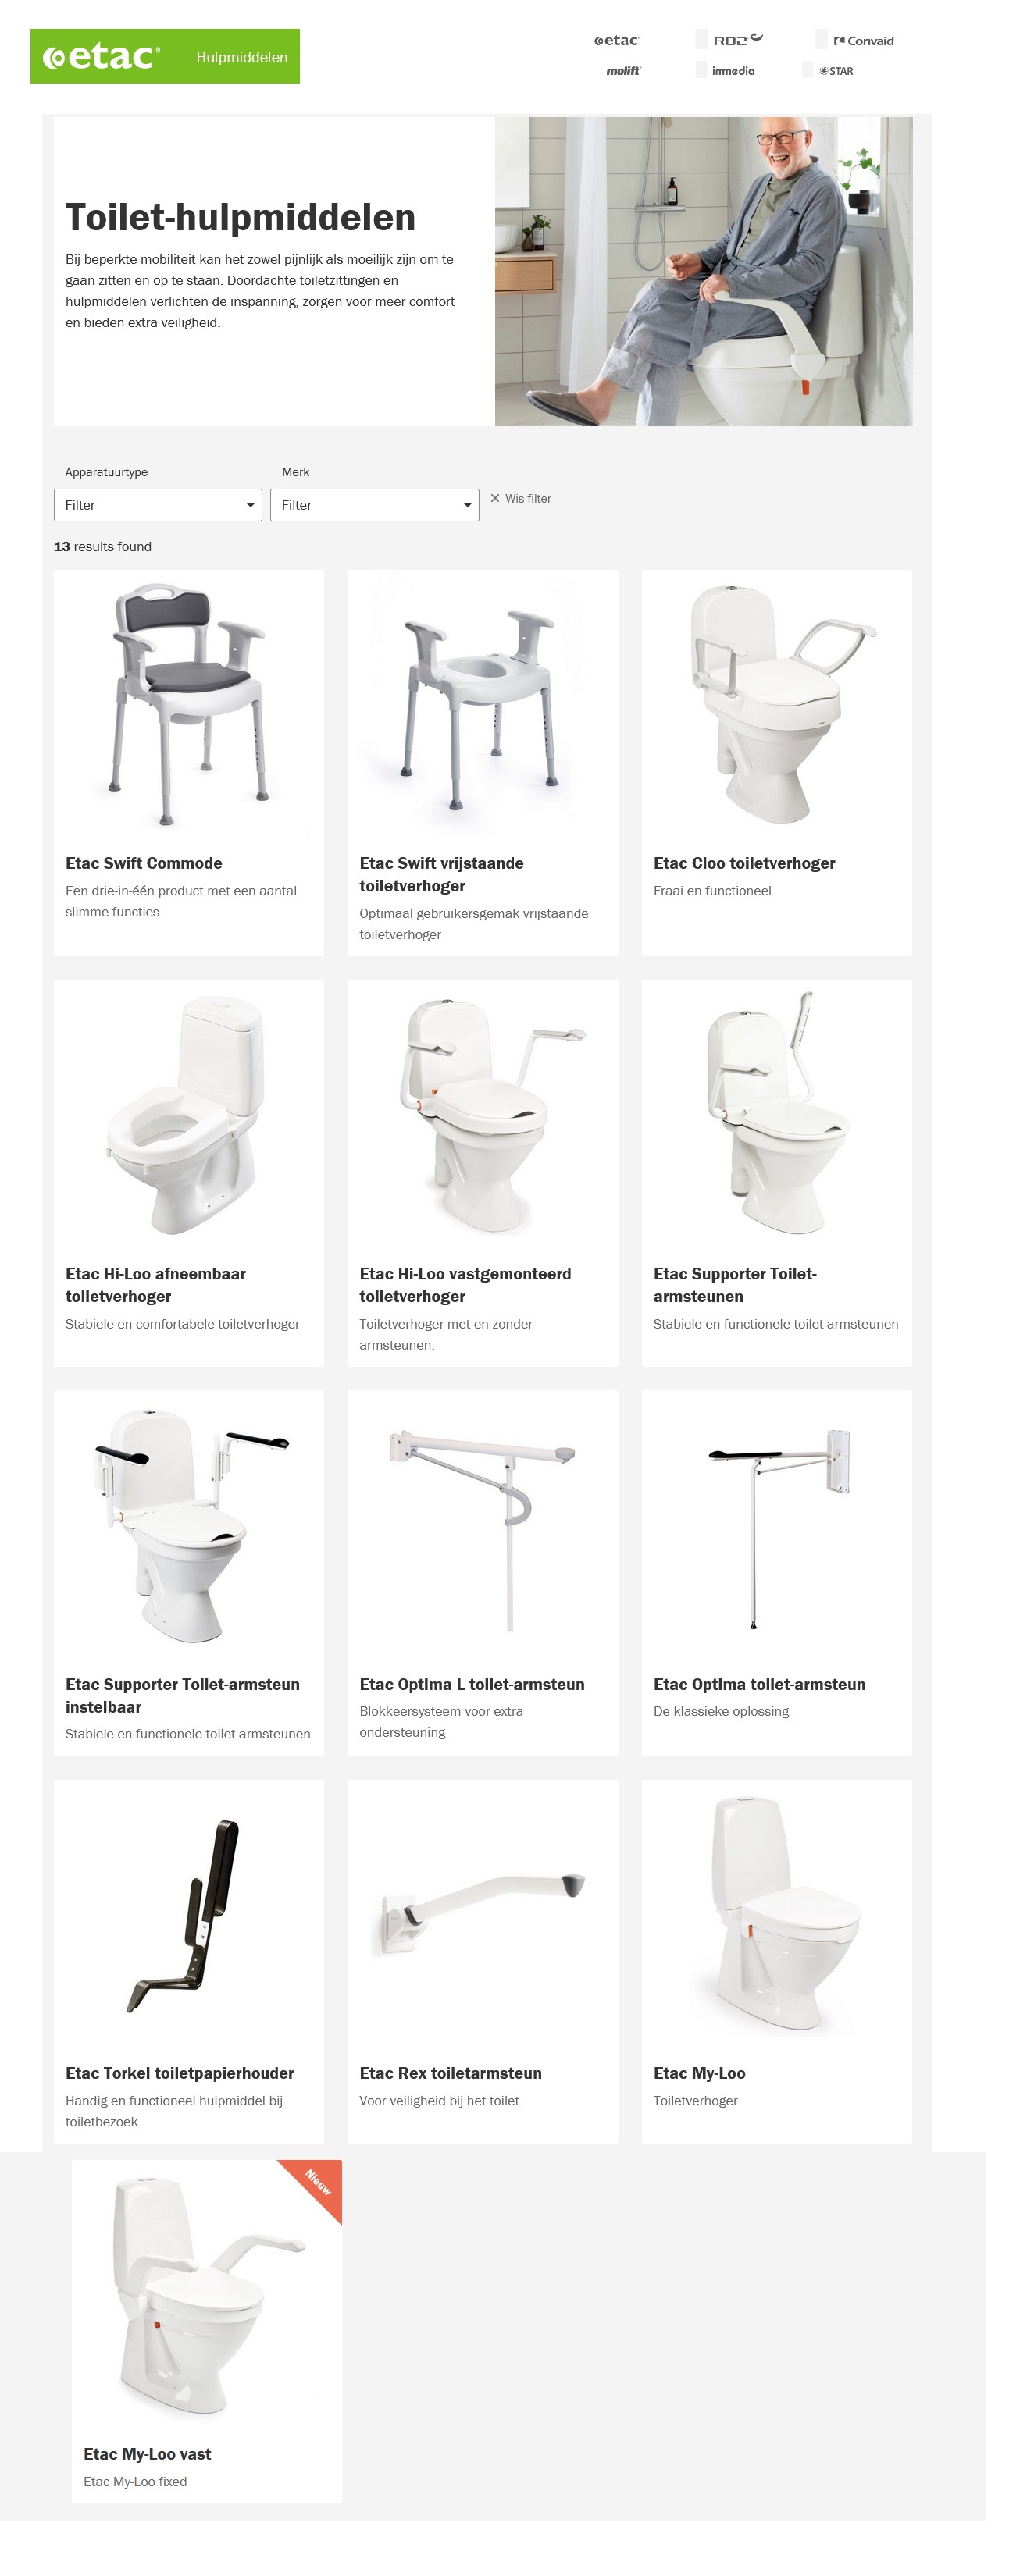 toegevoegd document 4 van Swift Commode toiletstoel  